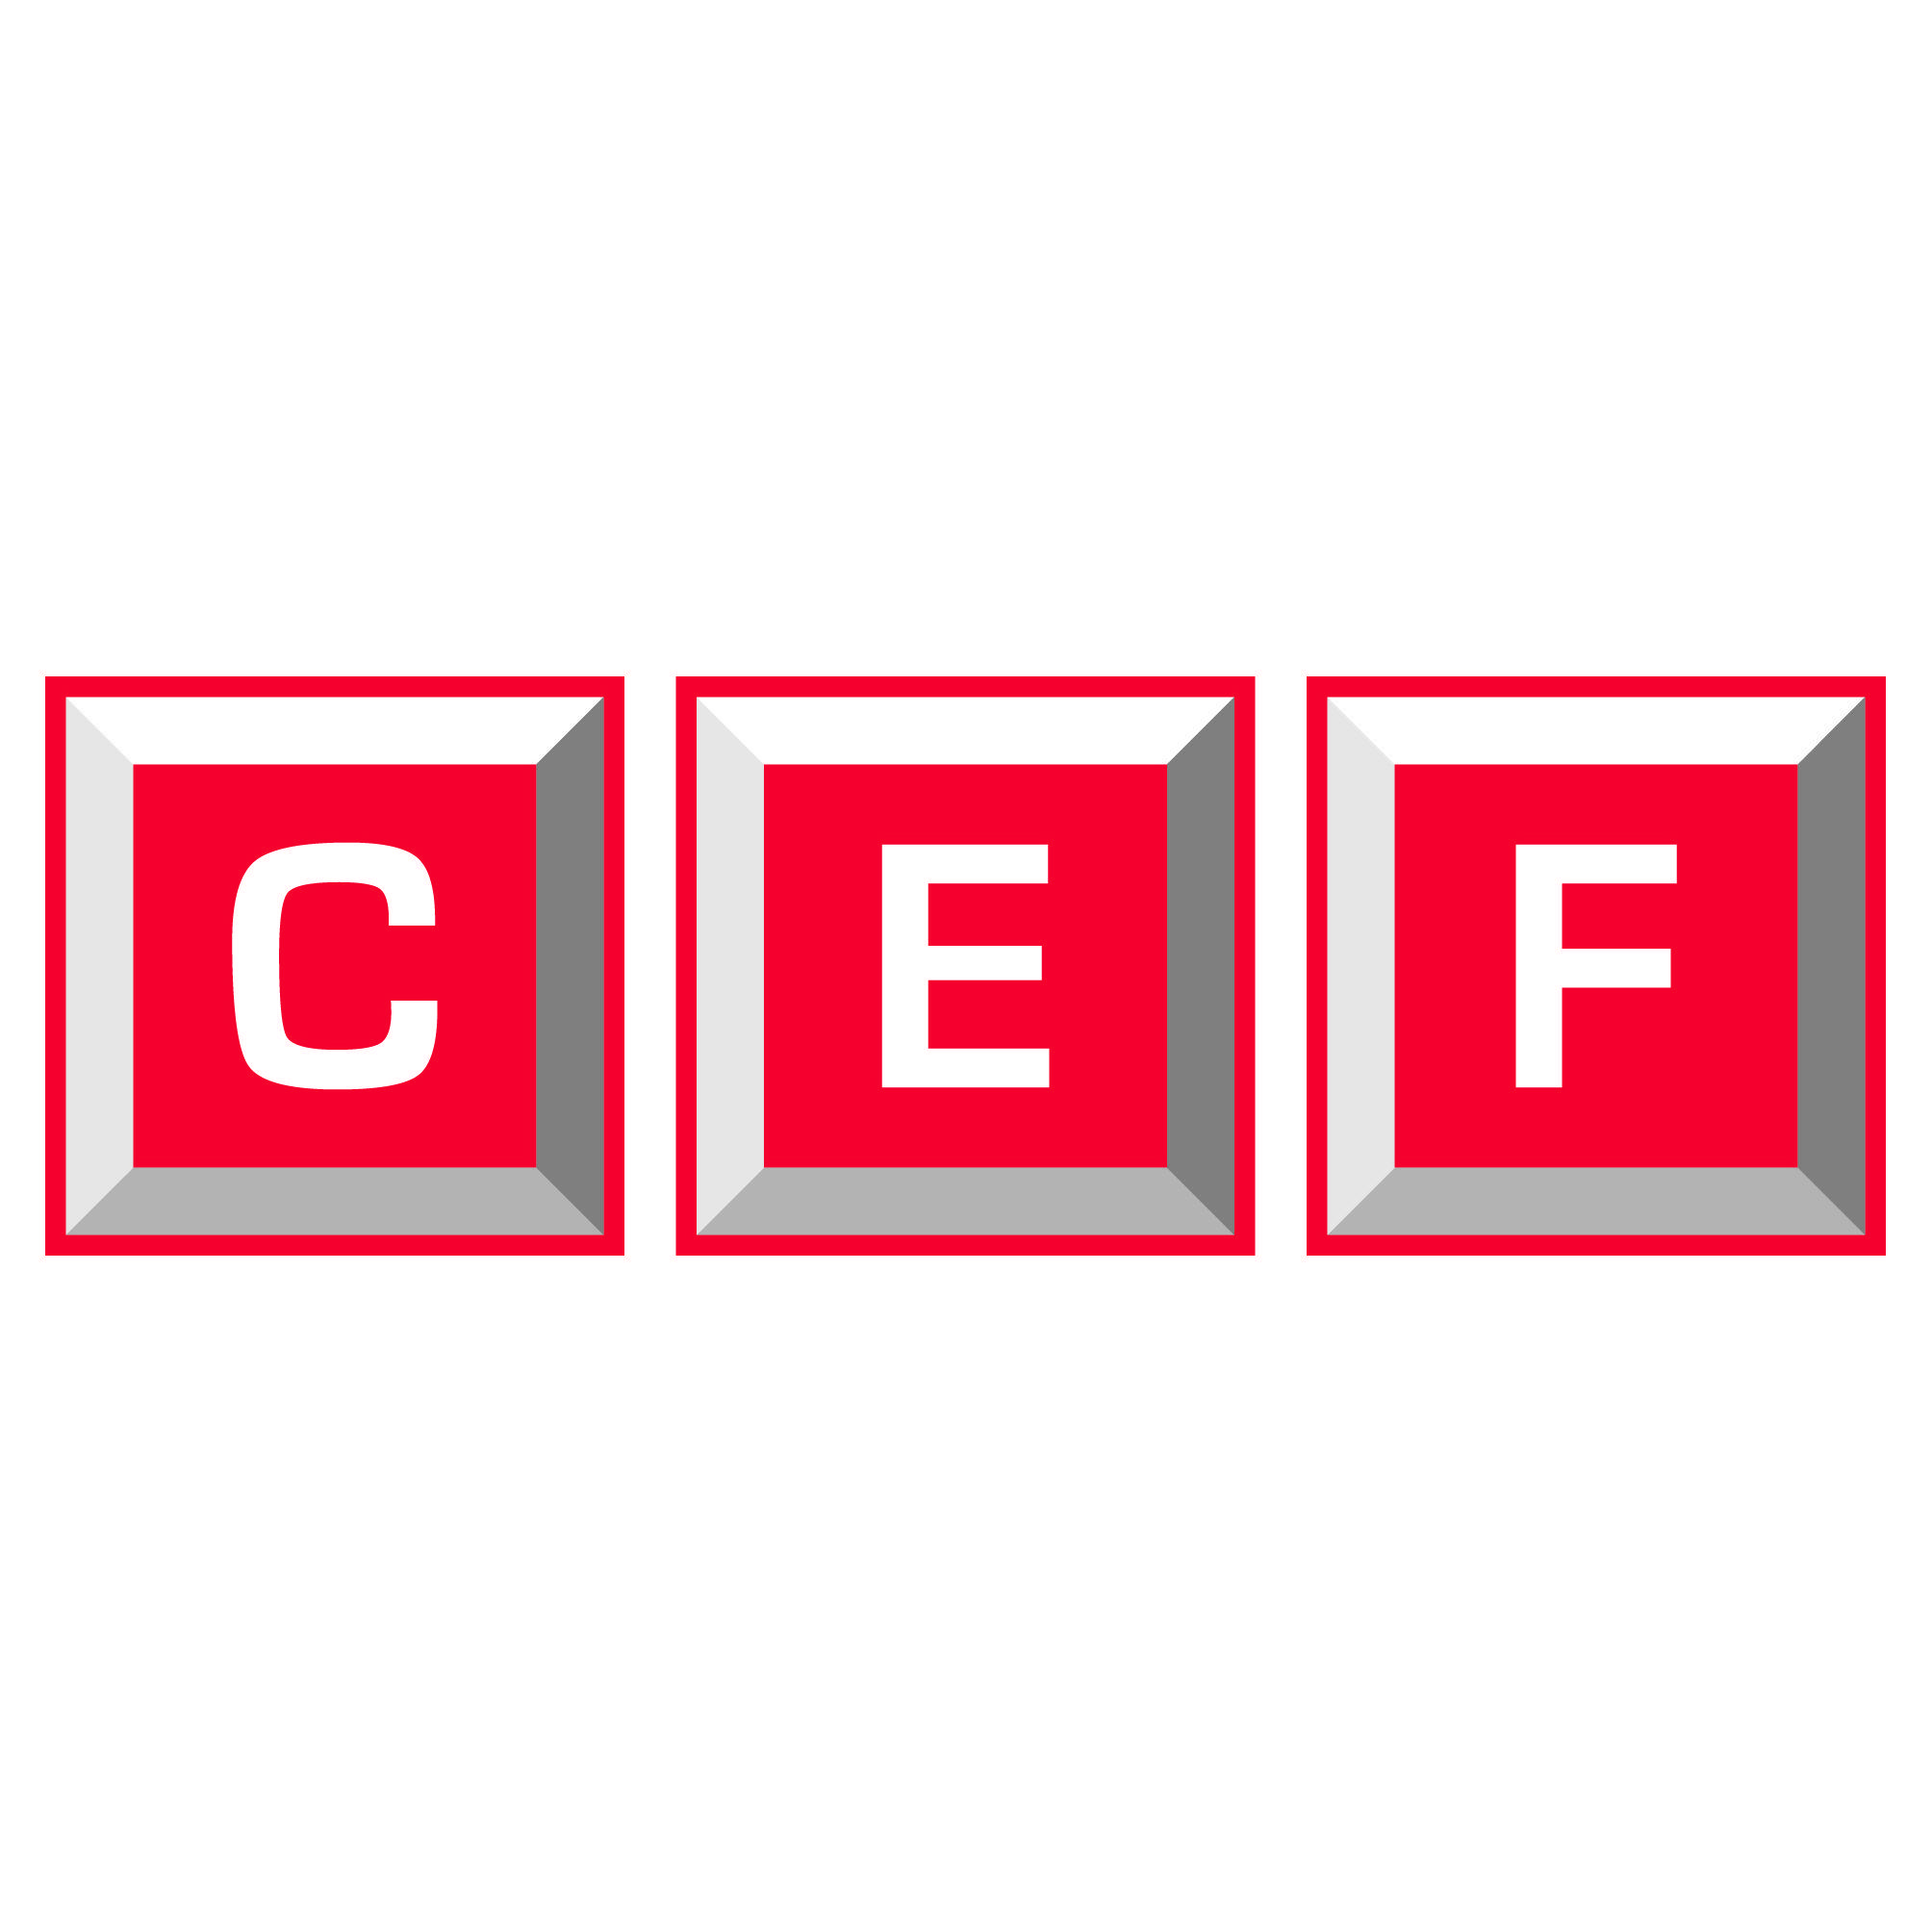 CEF Logo - CEF Logo Horizontal with clearance Emergency Lighting